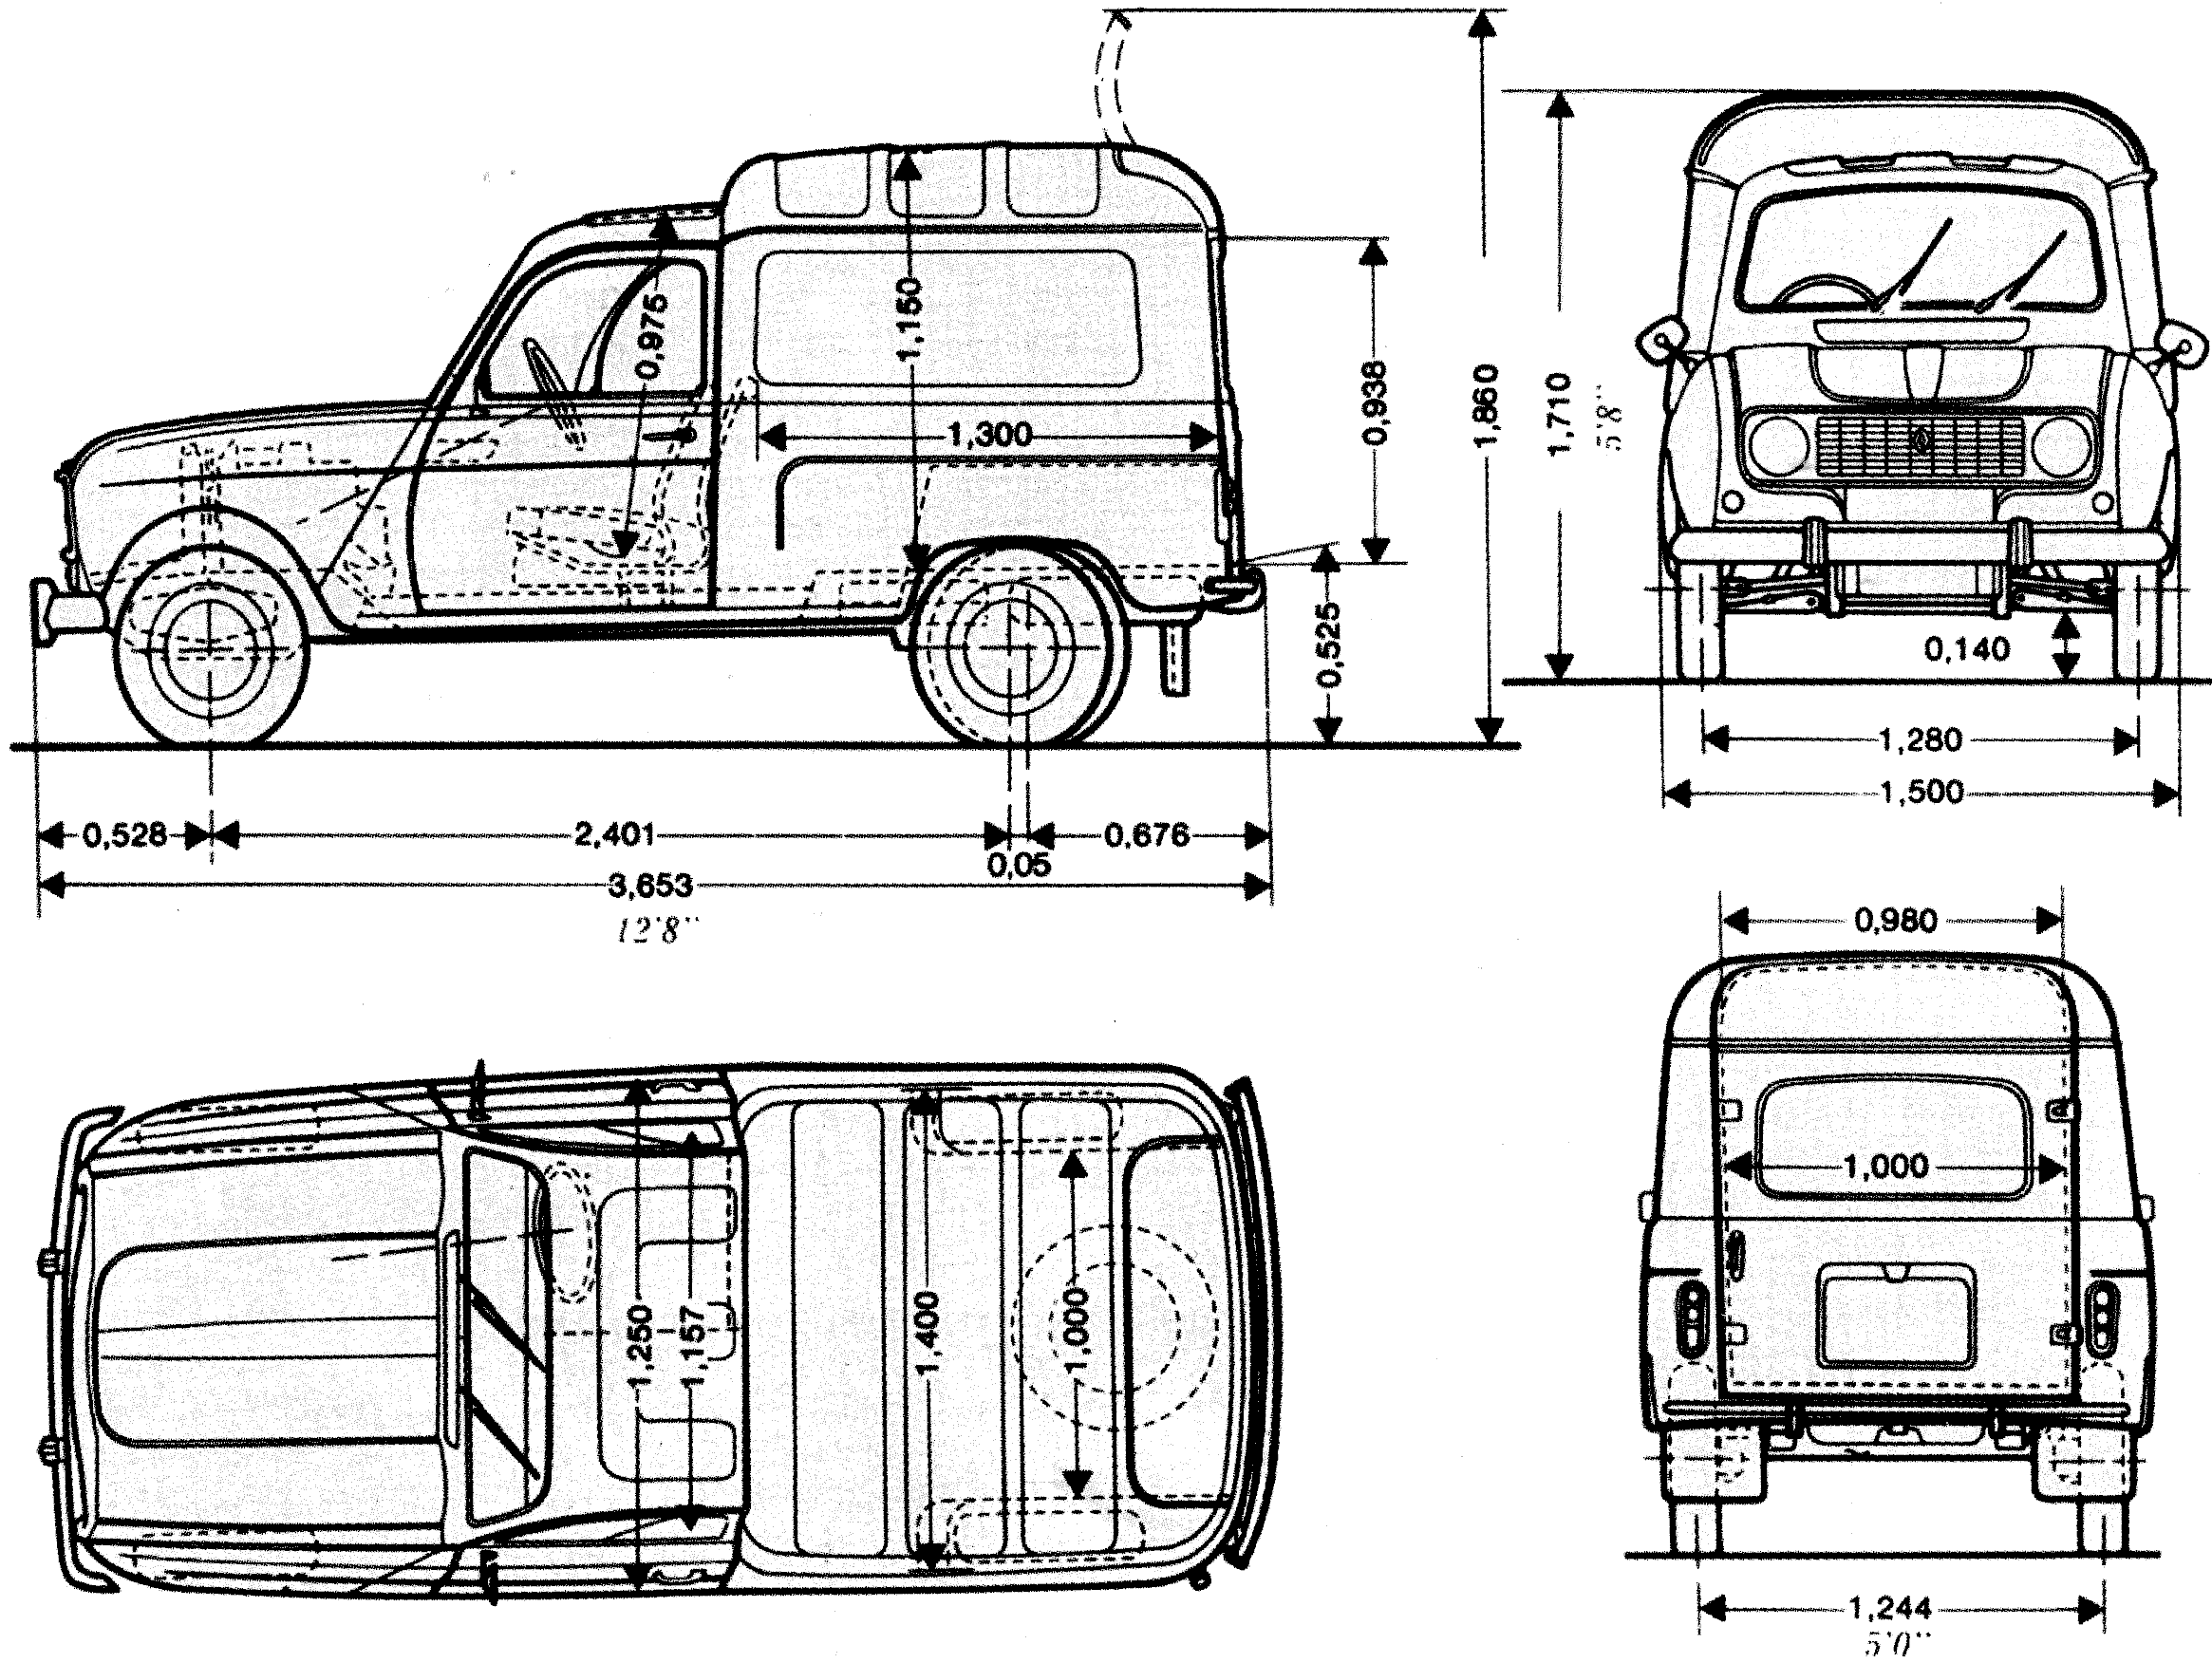 Renault 4 blueprint